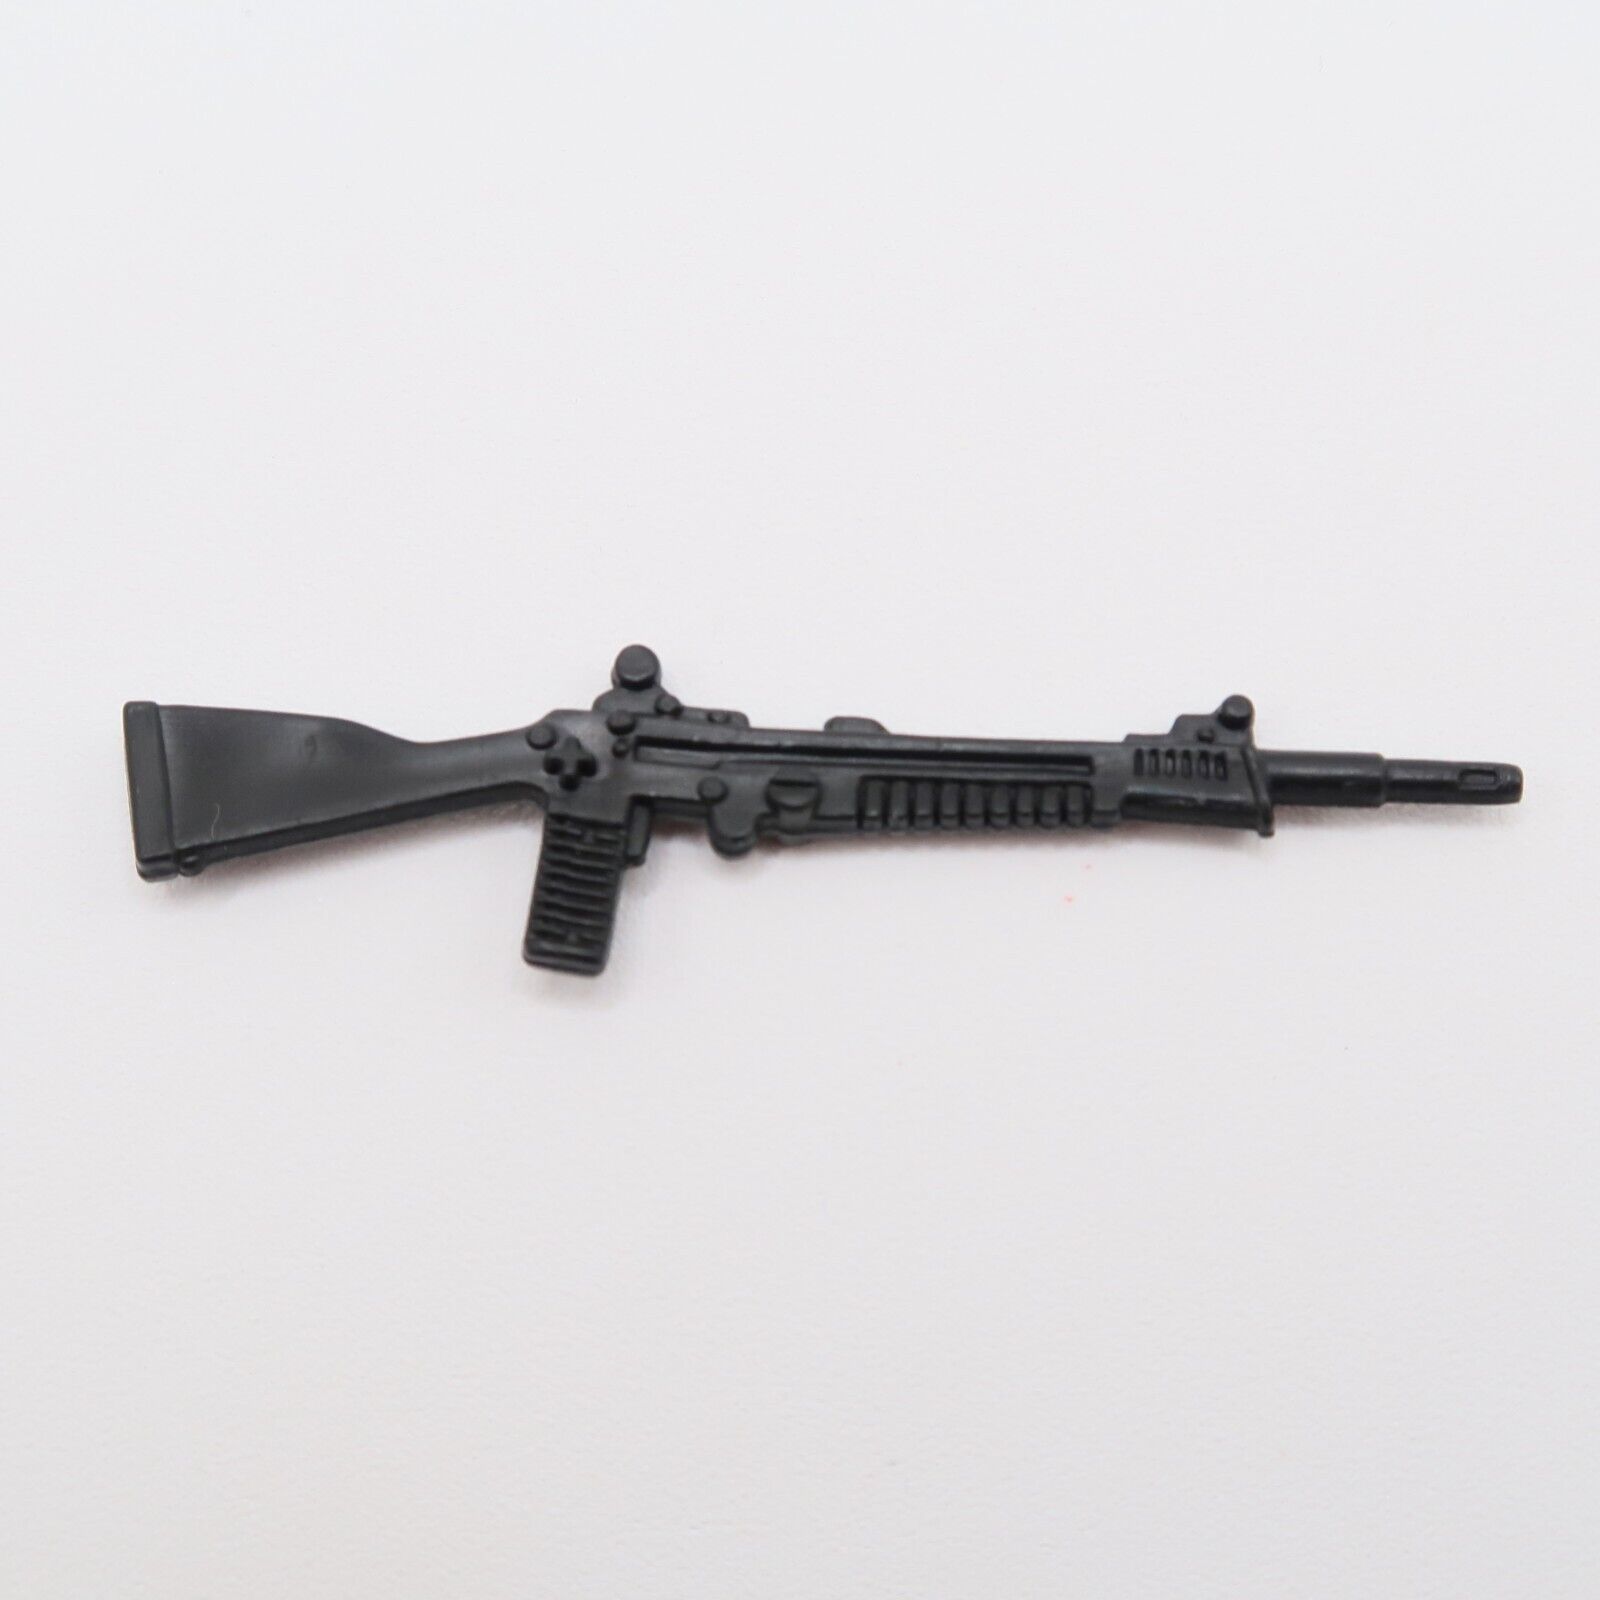 GI Joe Laser Rifle Accessory Black Gun Toy 2009 Parts Only - $7.48